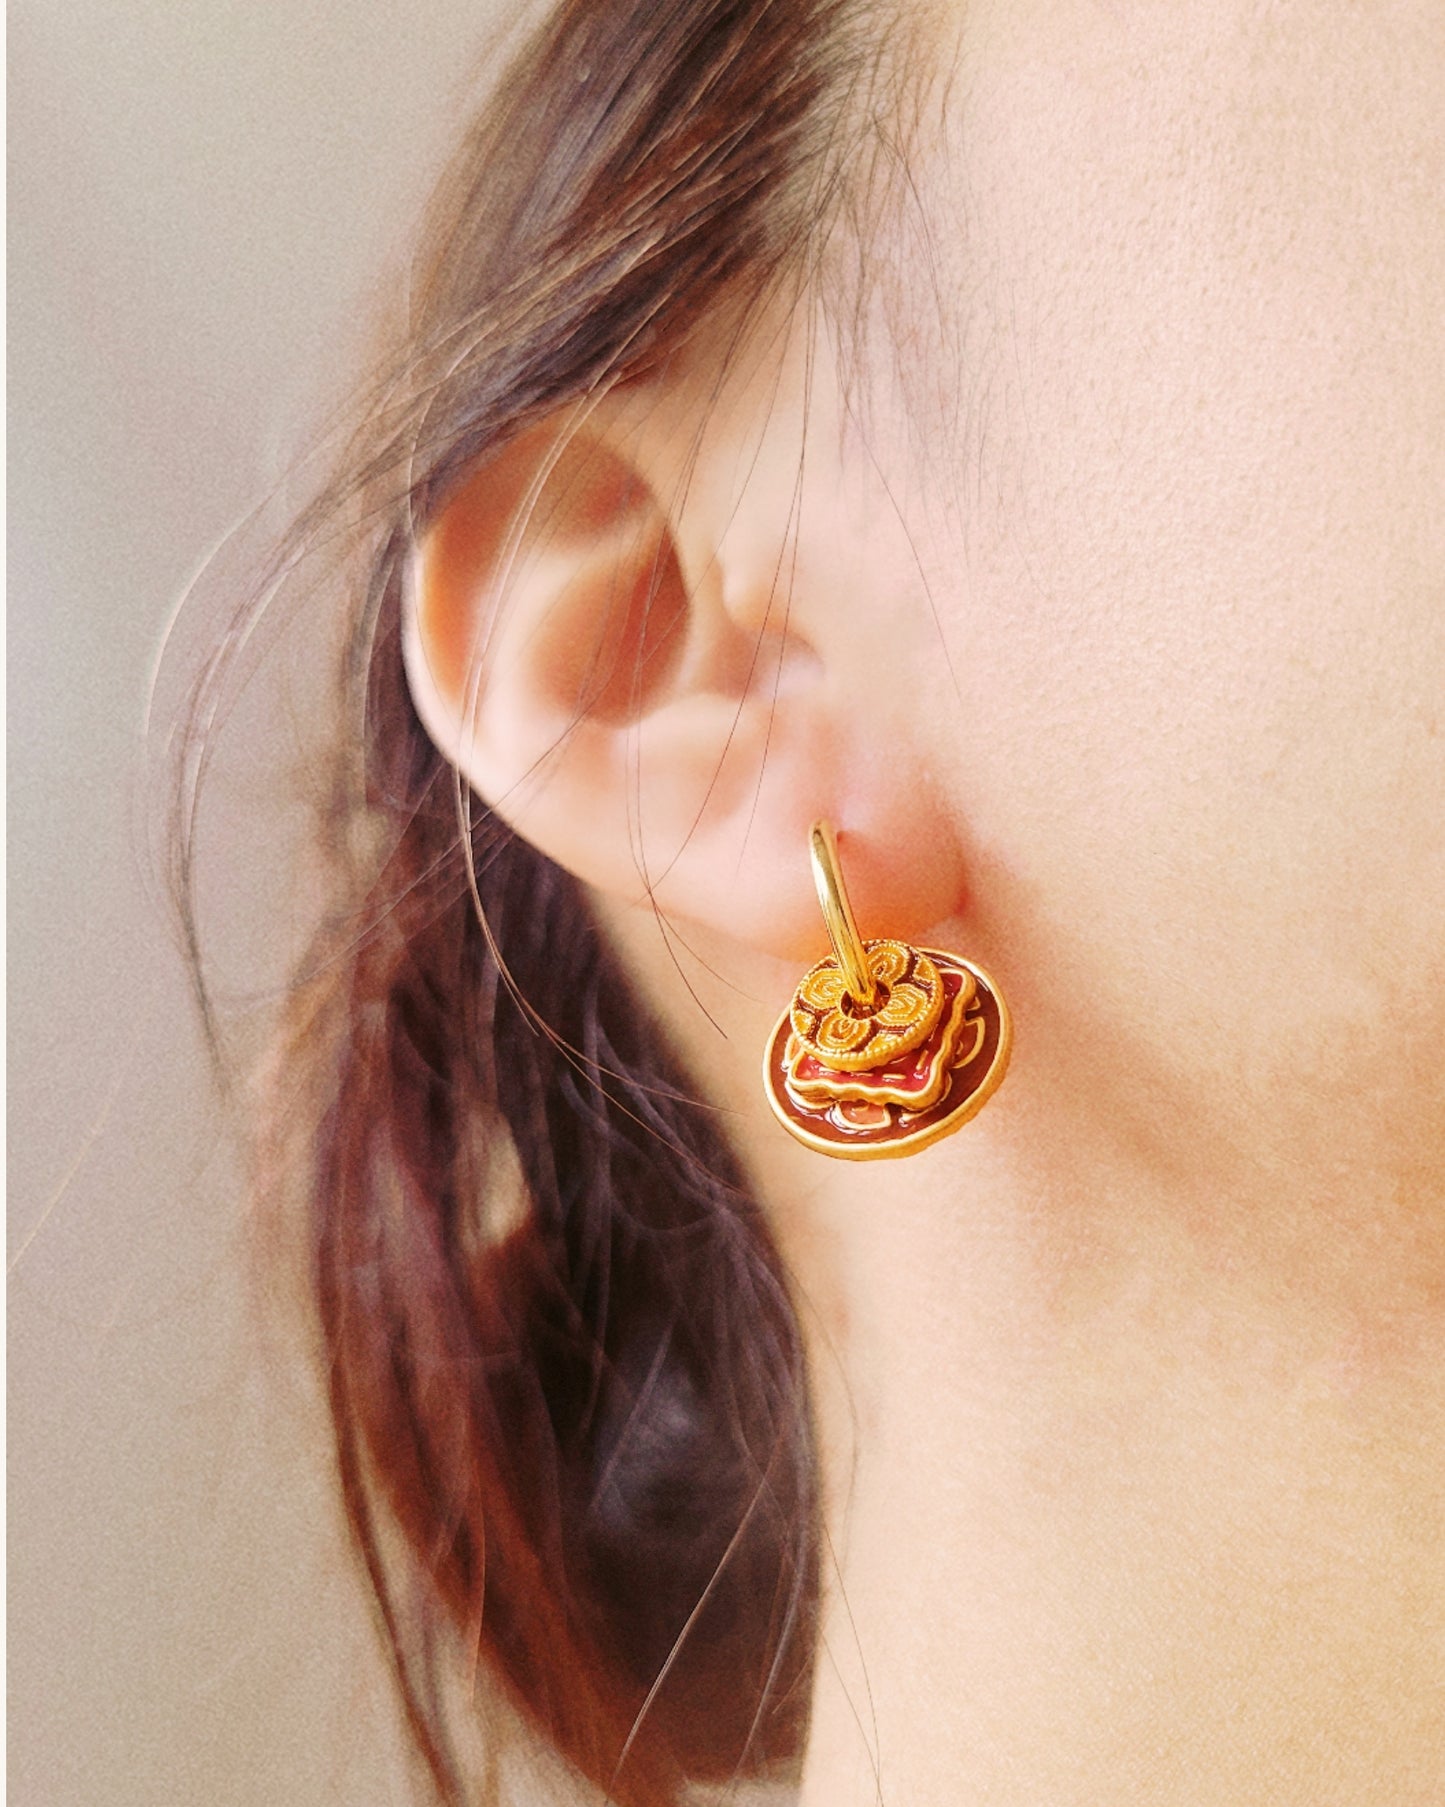 Cloisonné earrings